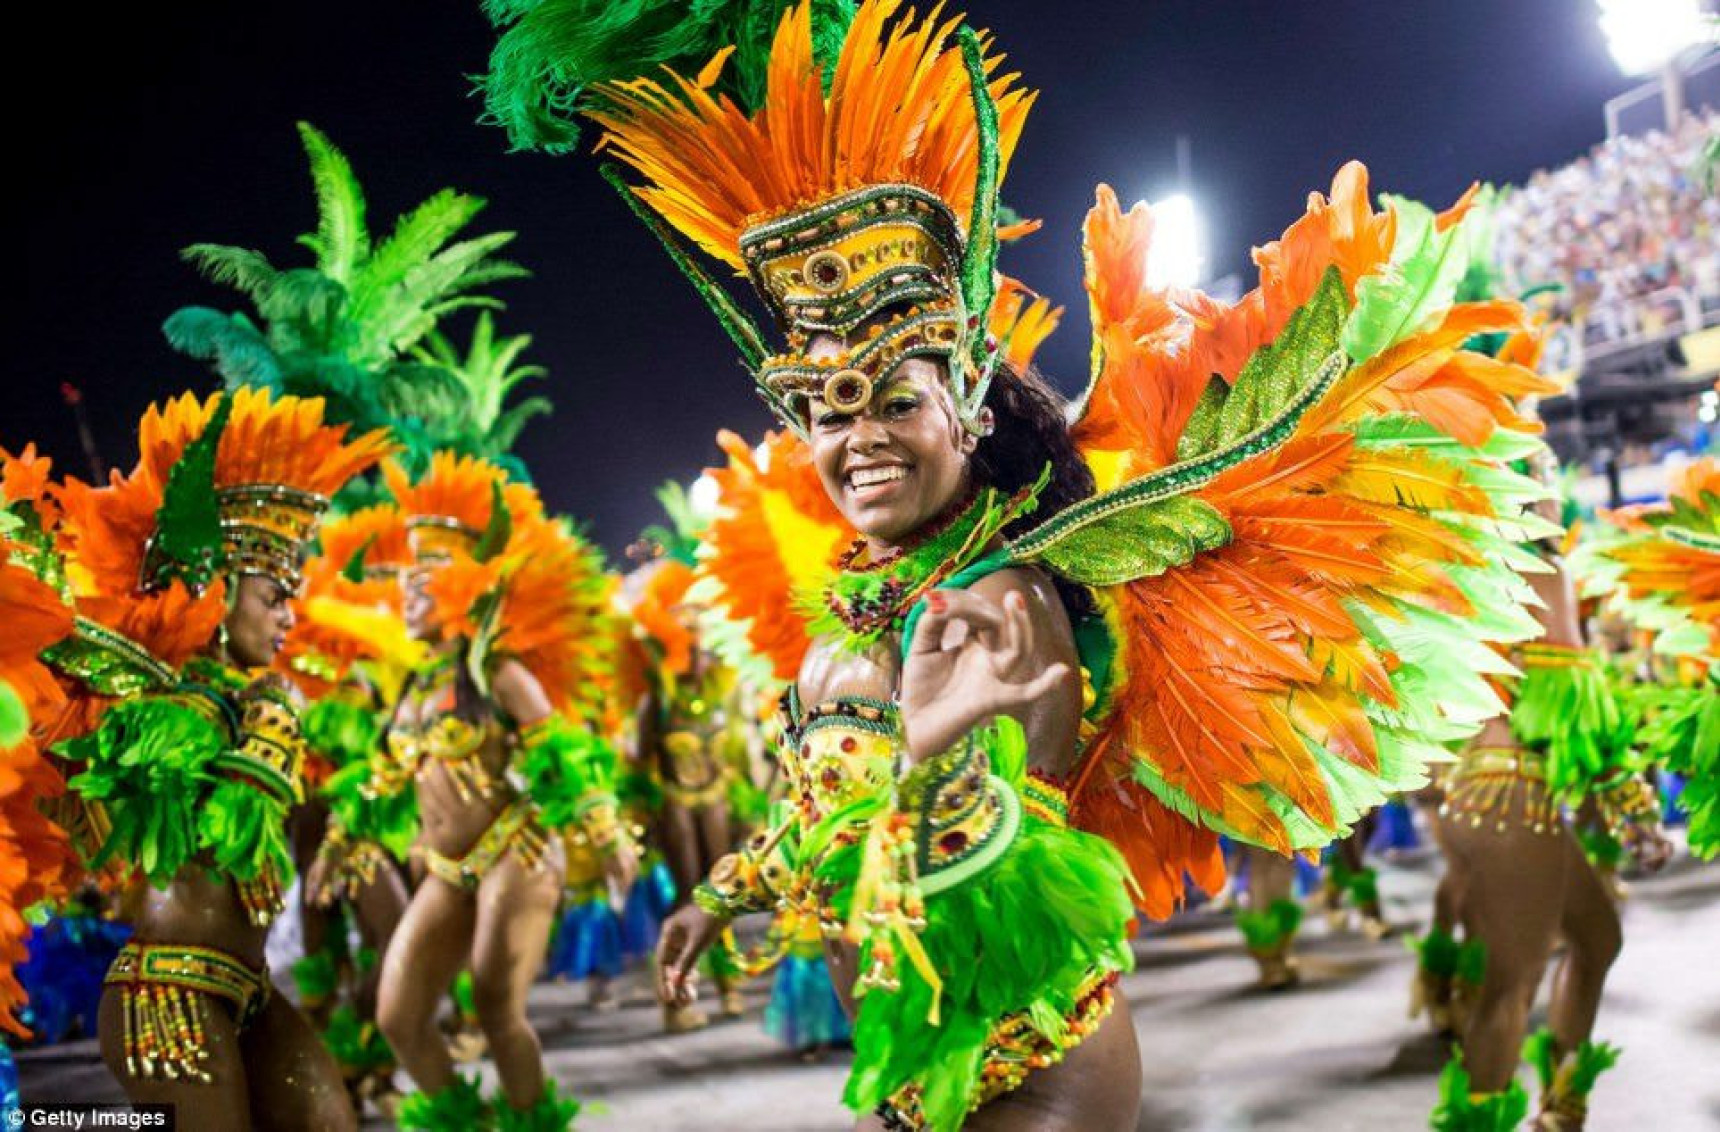 Rio carnival dancer in traditional costume